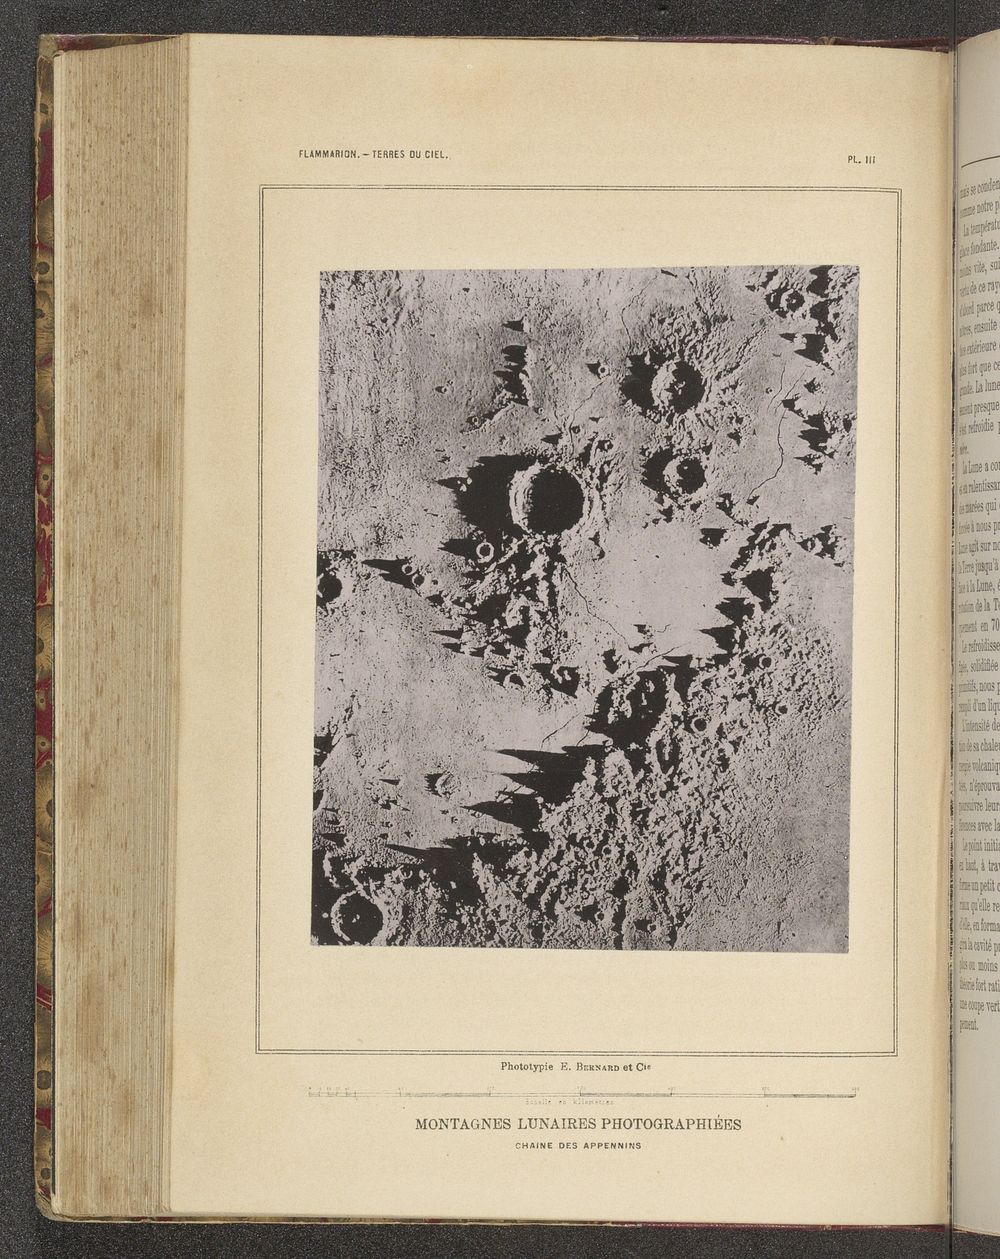 Gipsmodel, voorstellende het oppervlak van de Maan (c. 1874 - in or before 1884) by James Nasmyth and Bernard and Cie